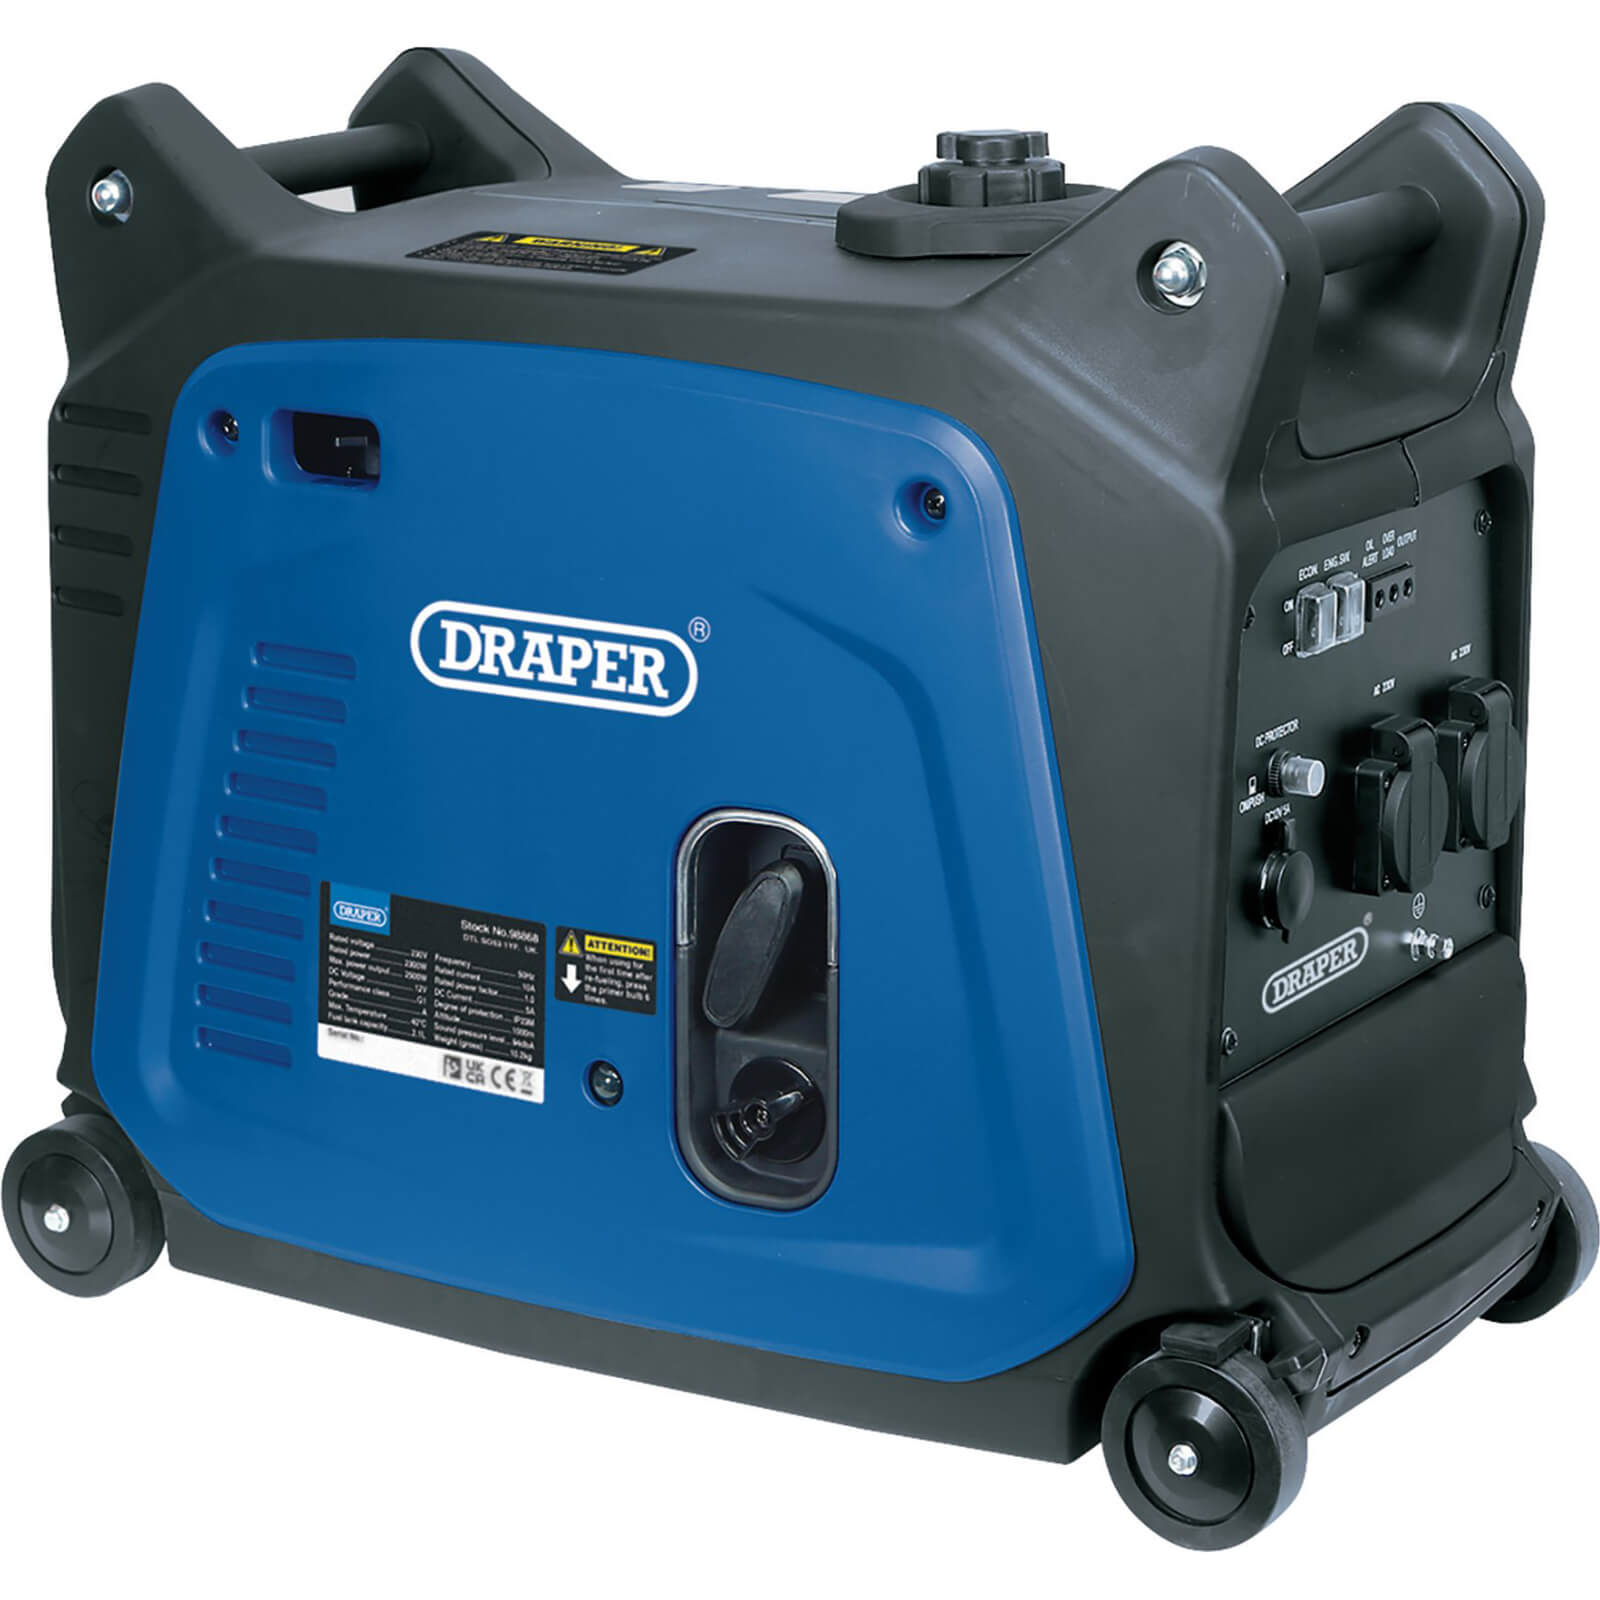 Image of Draper 95198 Petrol Inverter Generator 2800W